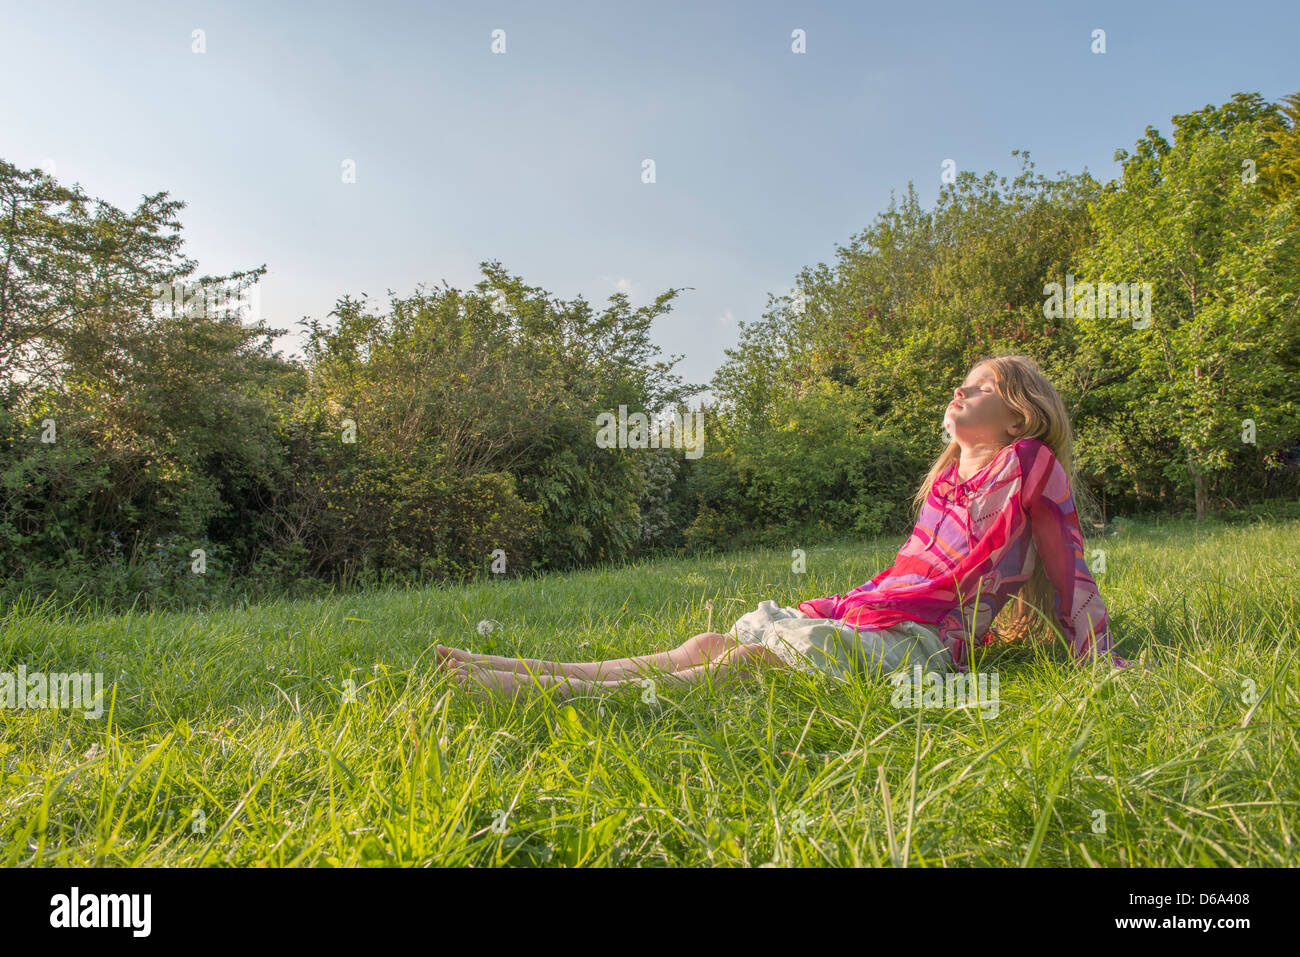 Girl sitting in grassy field Stock Photo